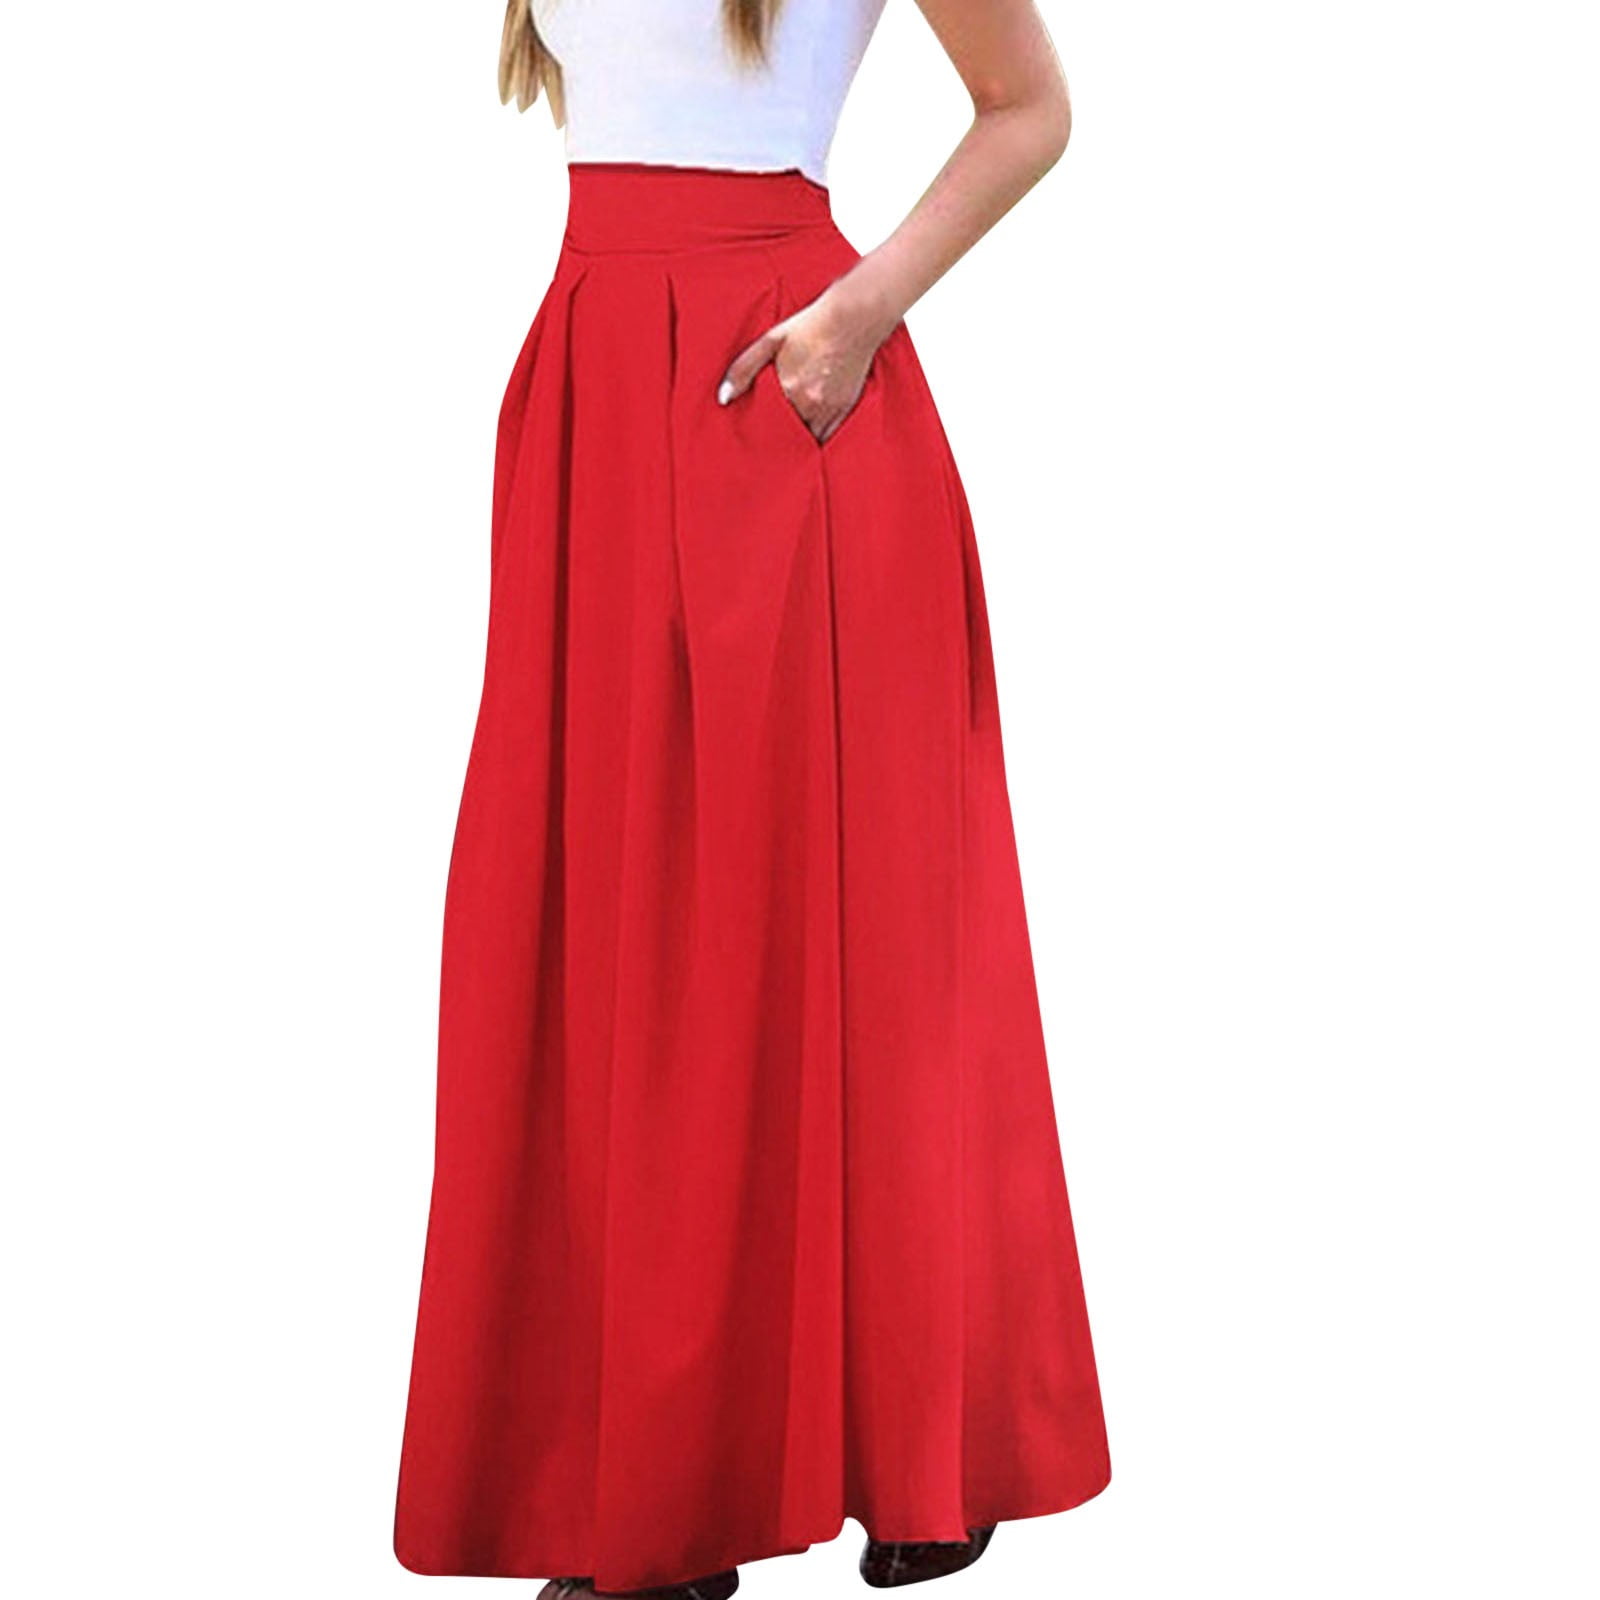 kpoplk Long Skirts for Women Women Floral Print High Waist Pocket Boho Maxi Skirt Party Beach Long Skirt Robe Lace Loose Woman Red 6787410a eb79 4a32 8872 158e77c6dad5.1f17fe9aefb634223bce476cb8c41eff